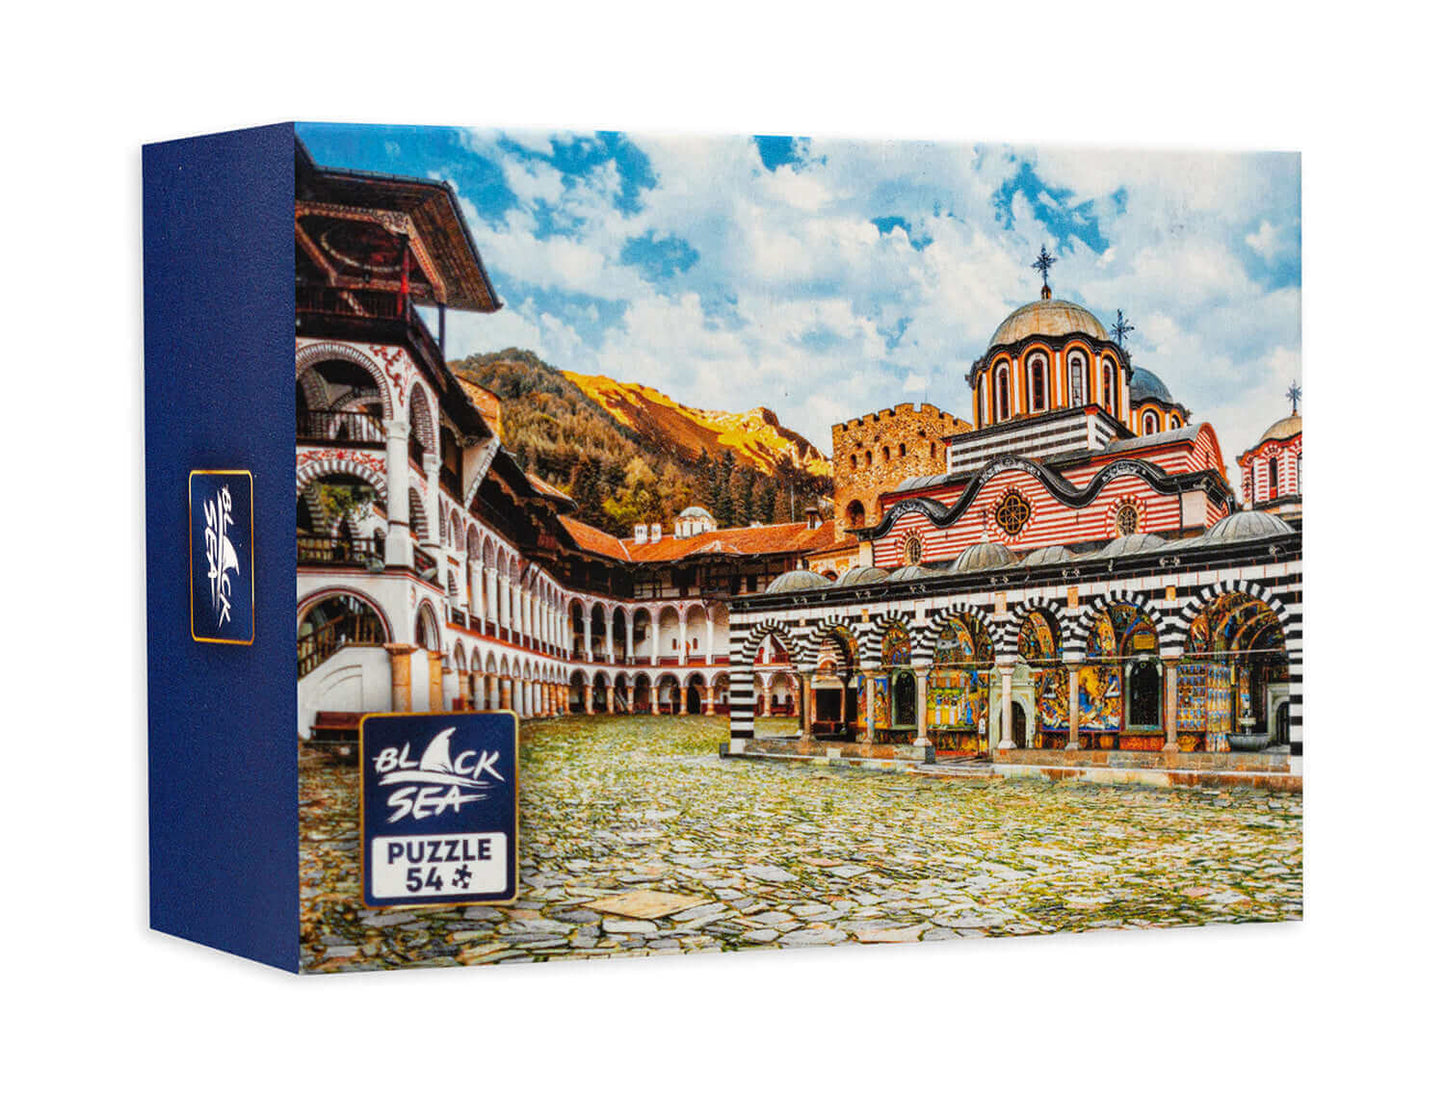 Mini puzzle Black sea 54 pieces - Rila Monastery, -